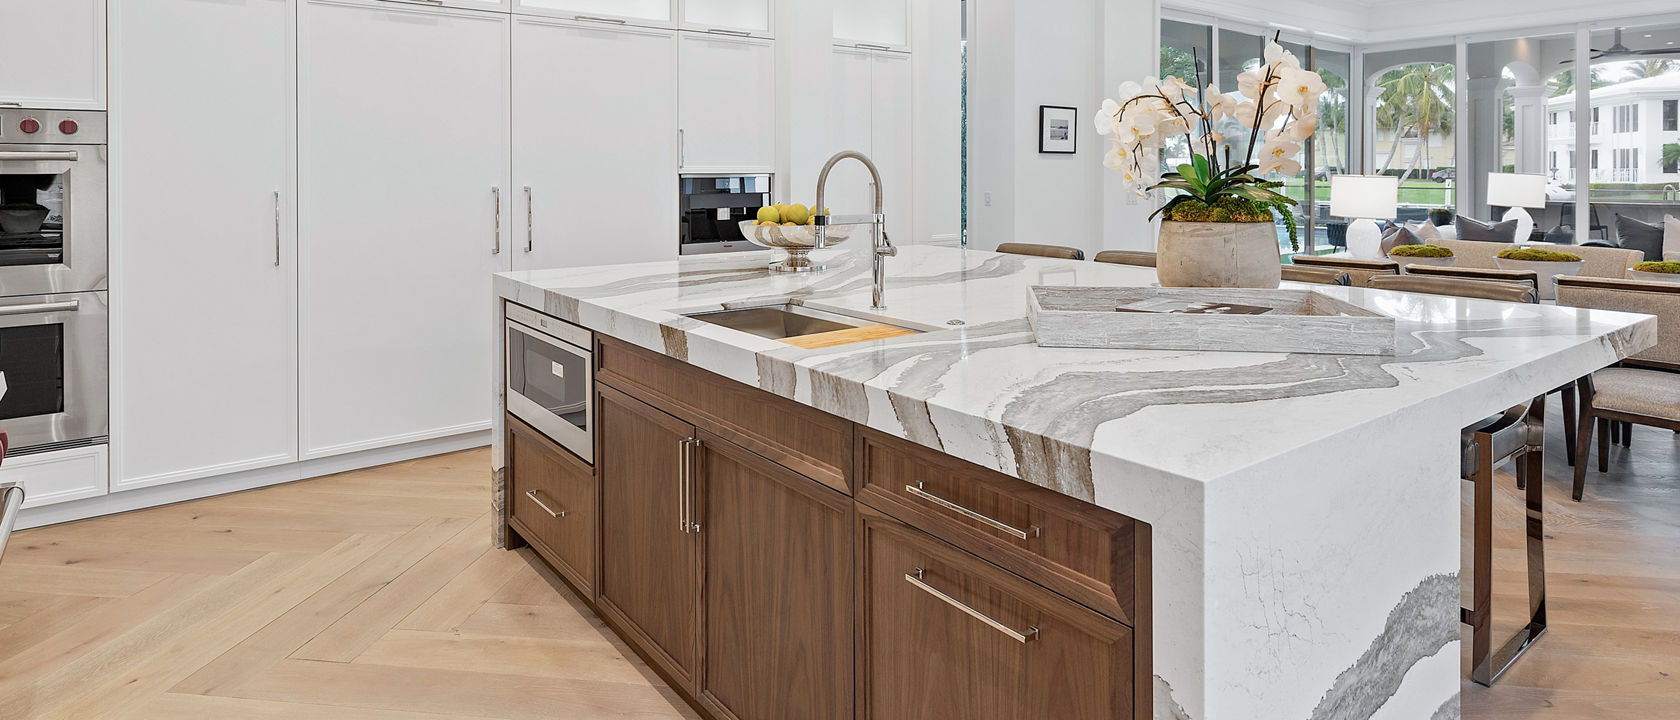 Cambria Skara Brae quartz island countertops in an all-white kitchen space.